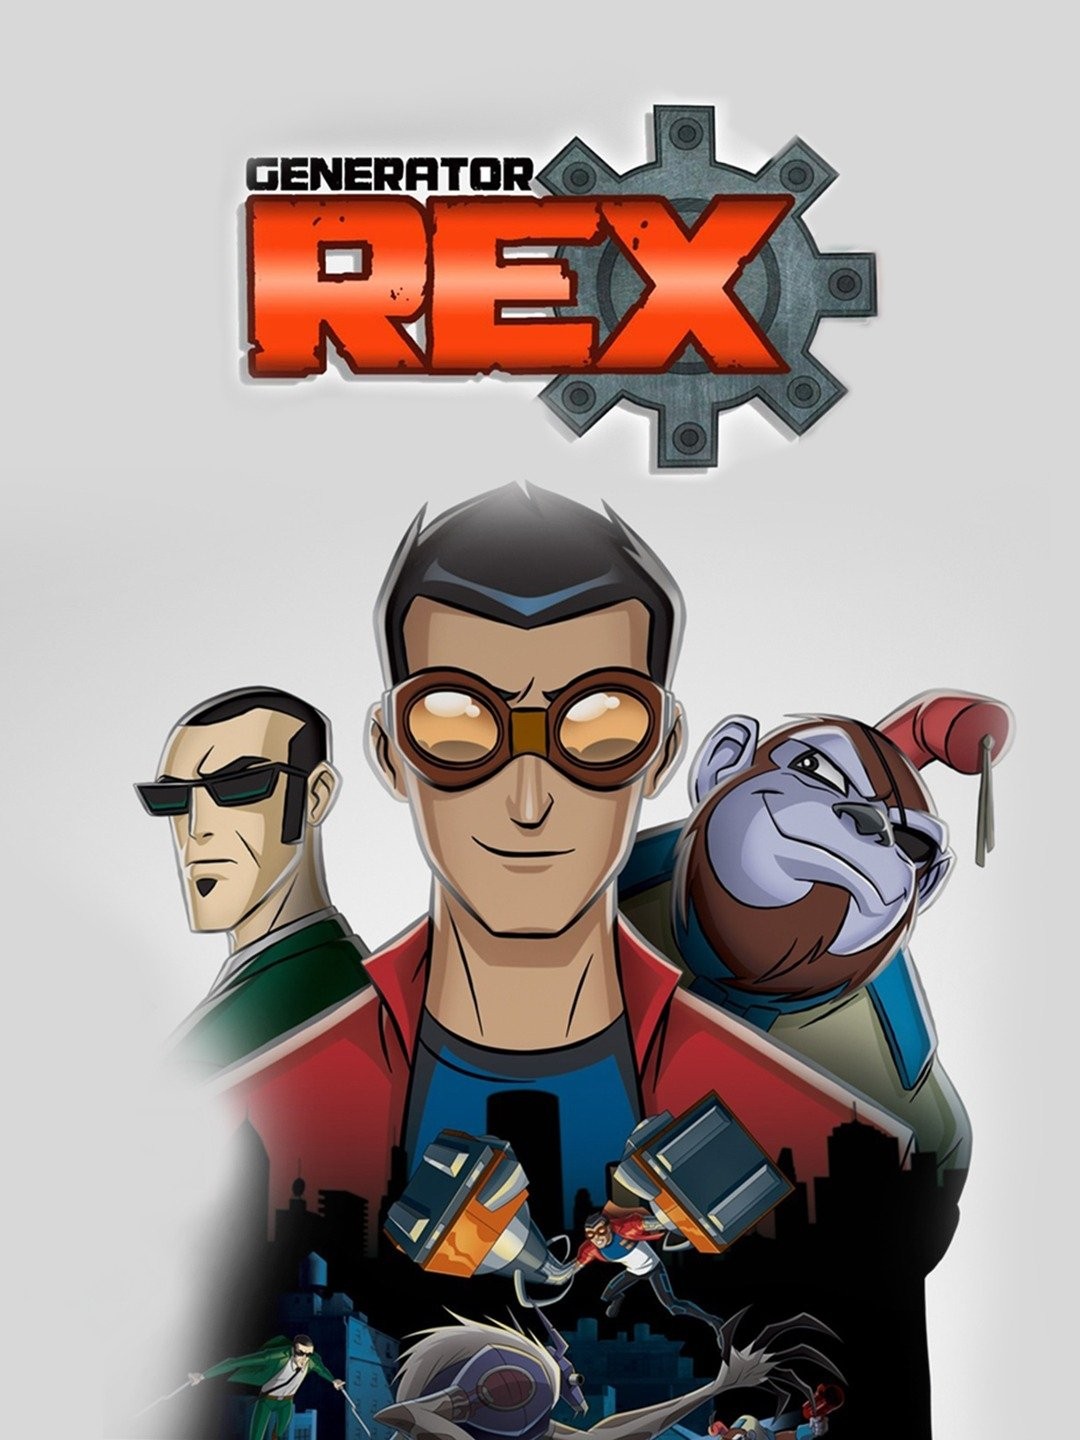 Generator Rex - streaming tv show online